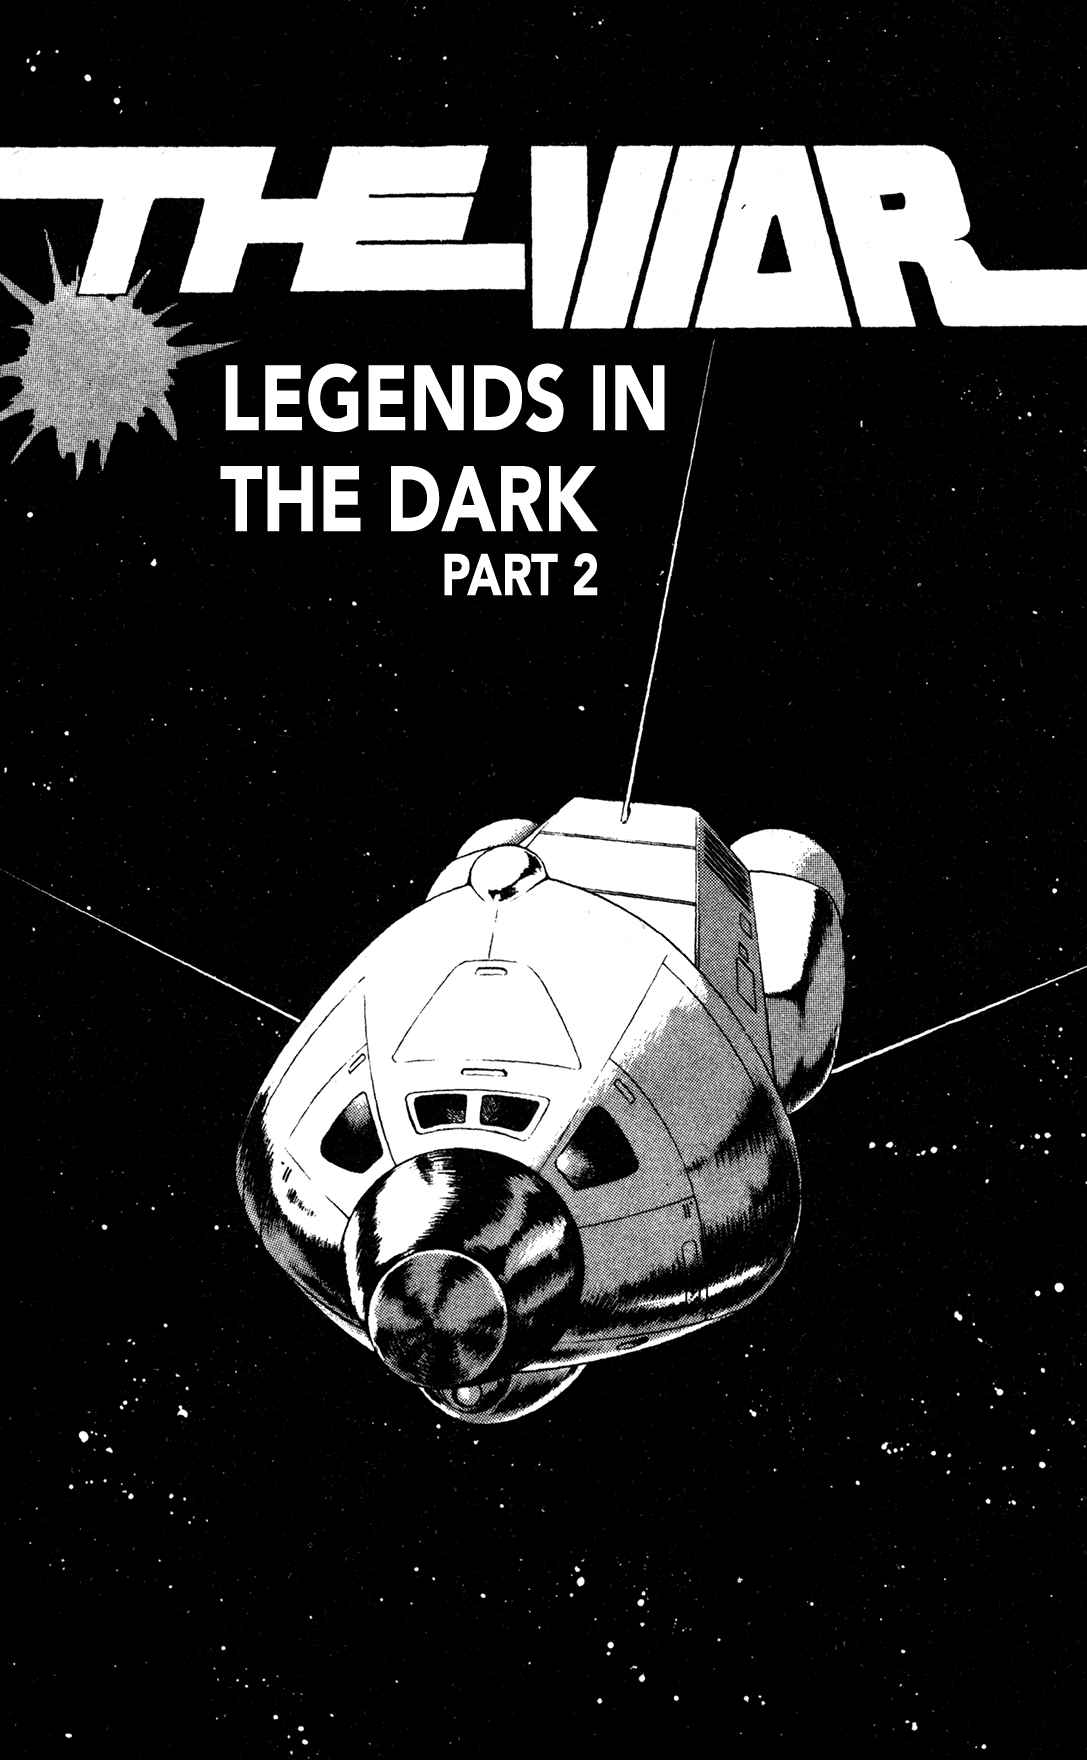 Legends in the Dark Vol. 1 Ch. 2 Legends in the Dark (Part 2)